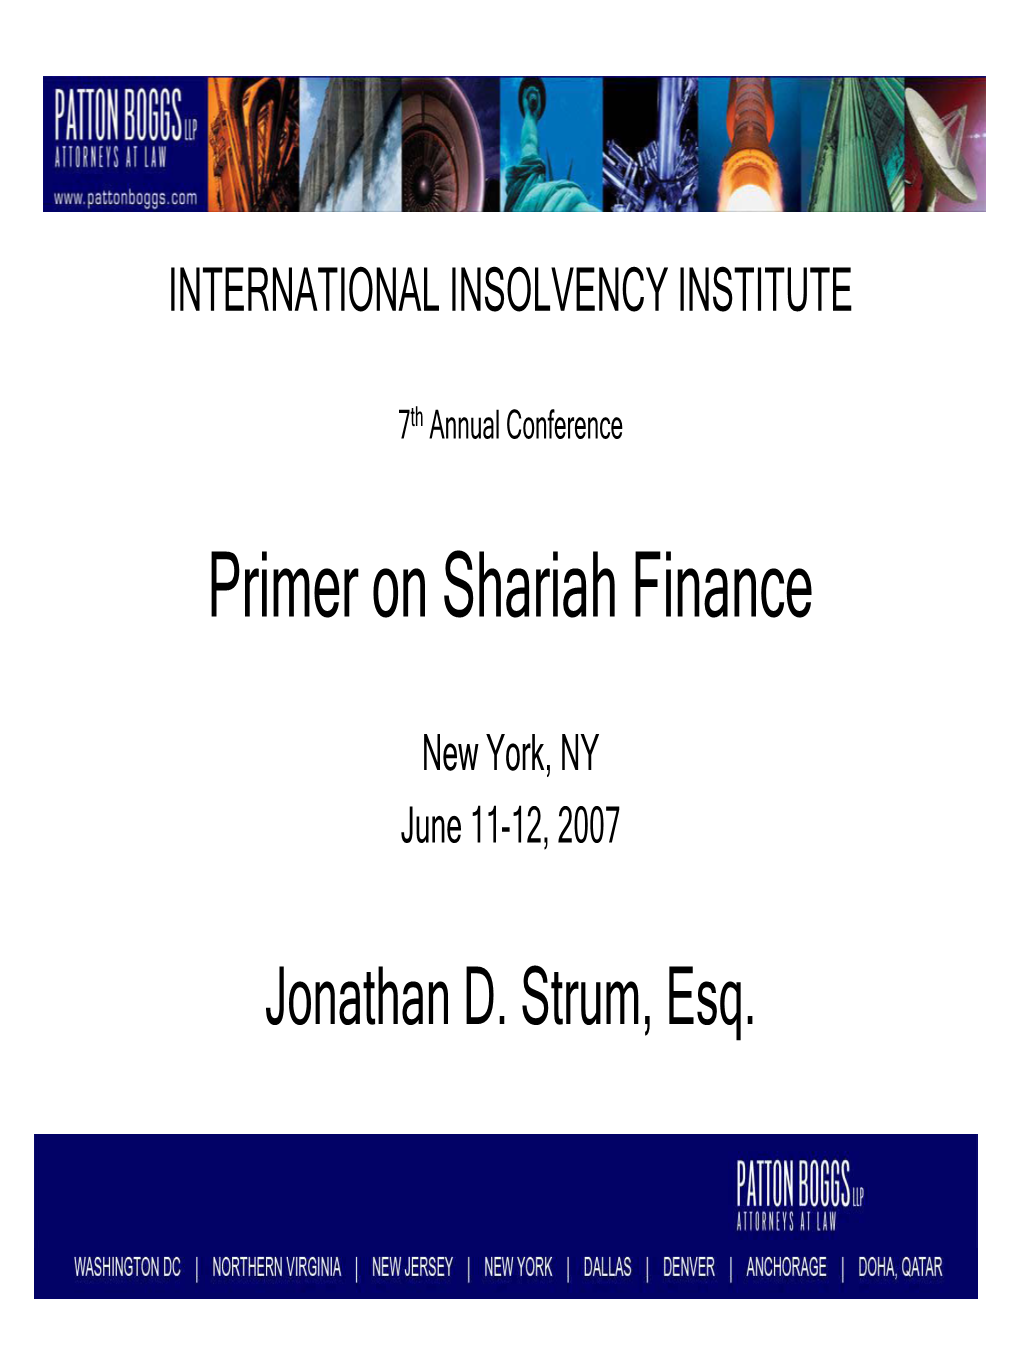 Primer on Shariah Finance (Jonathan D. Strum)